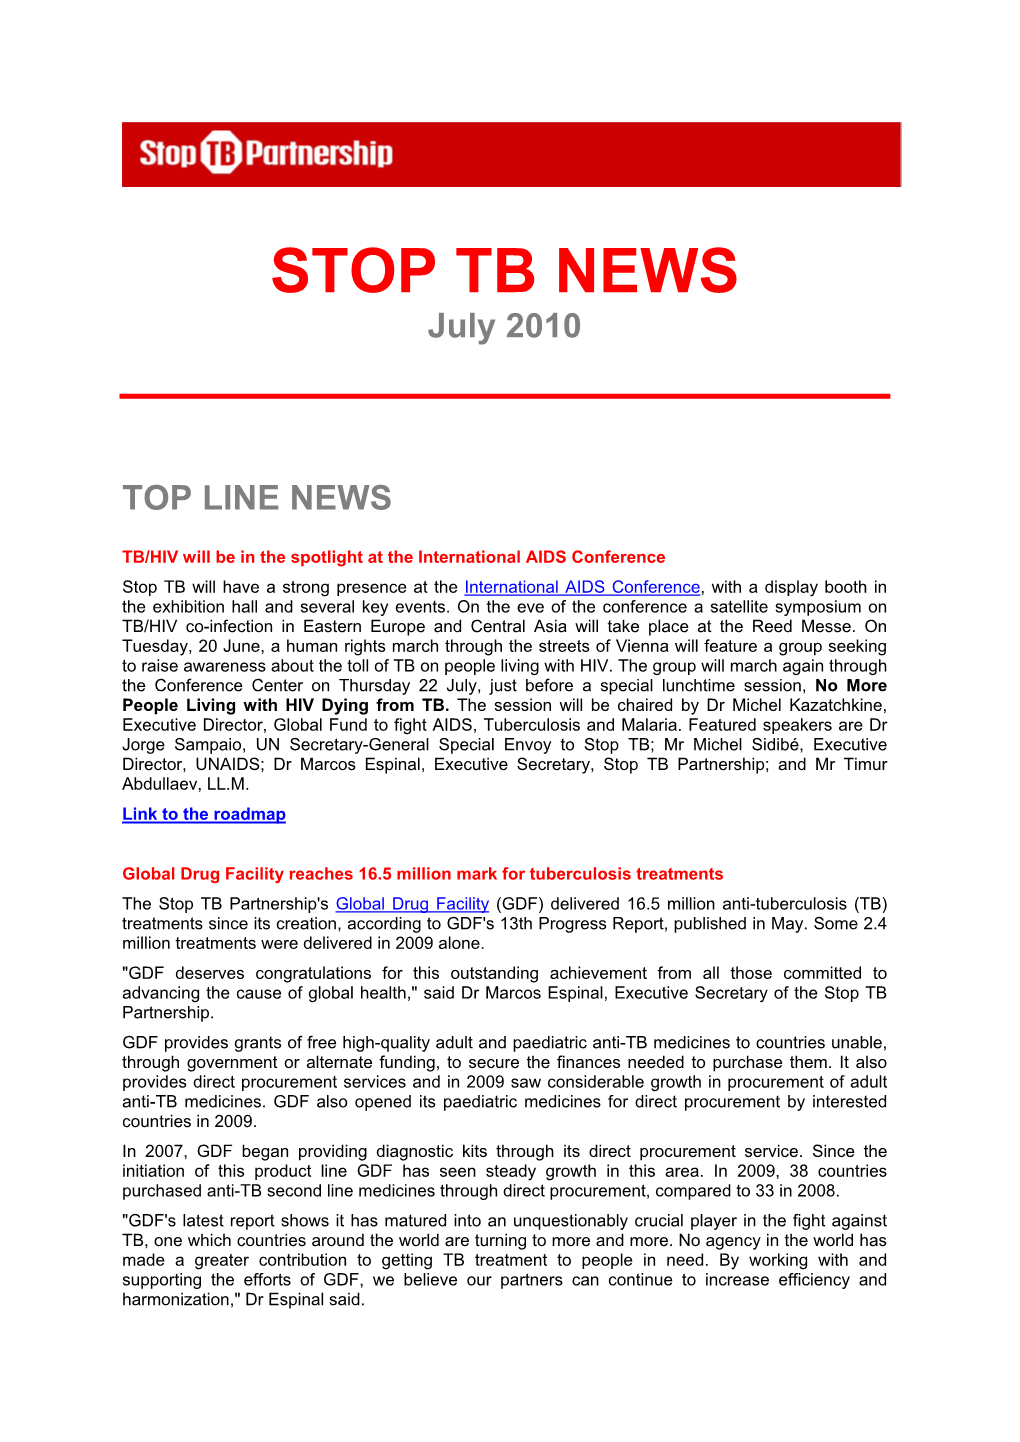 STOP TB NEWS July 2010